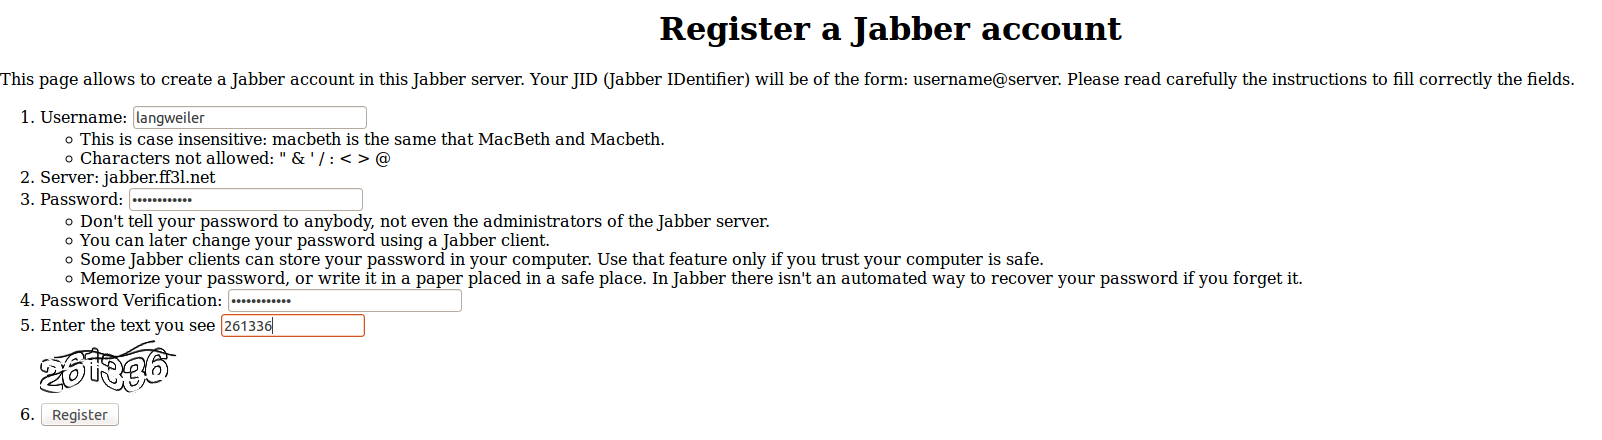 Jabber registrierung.png